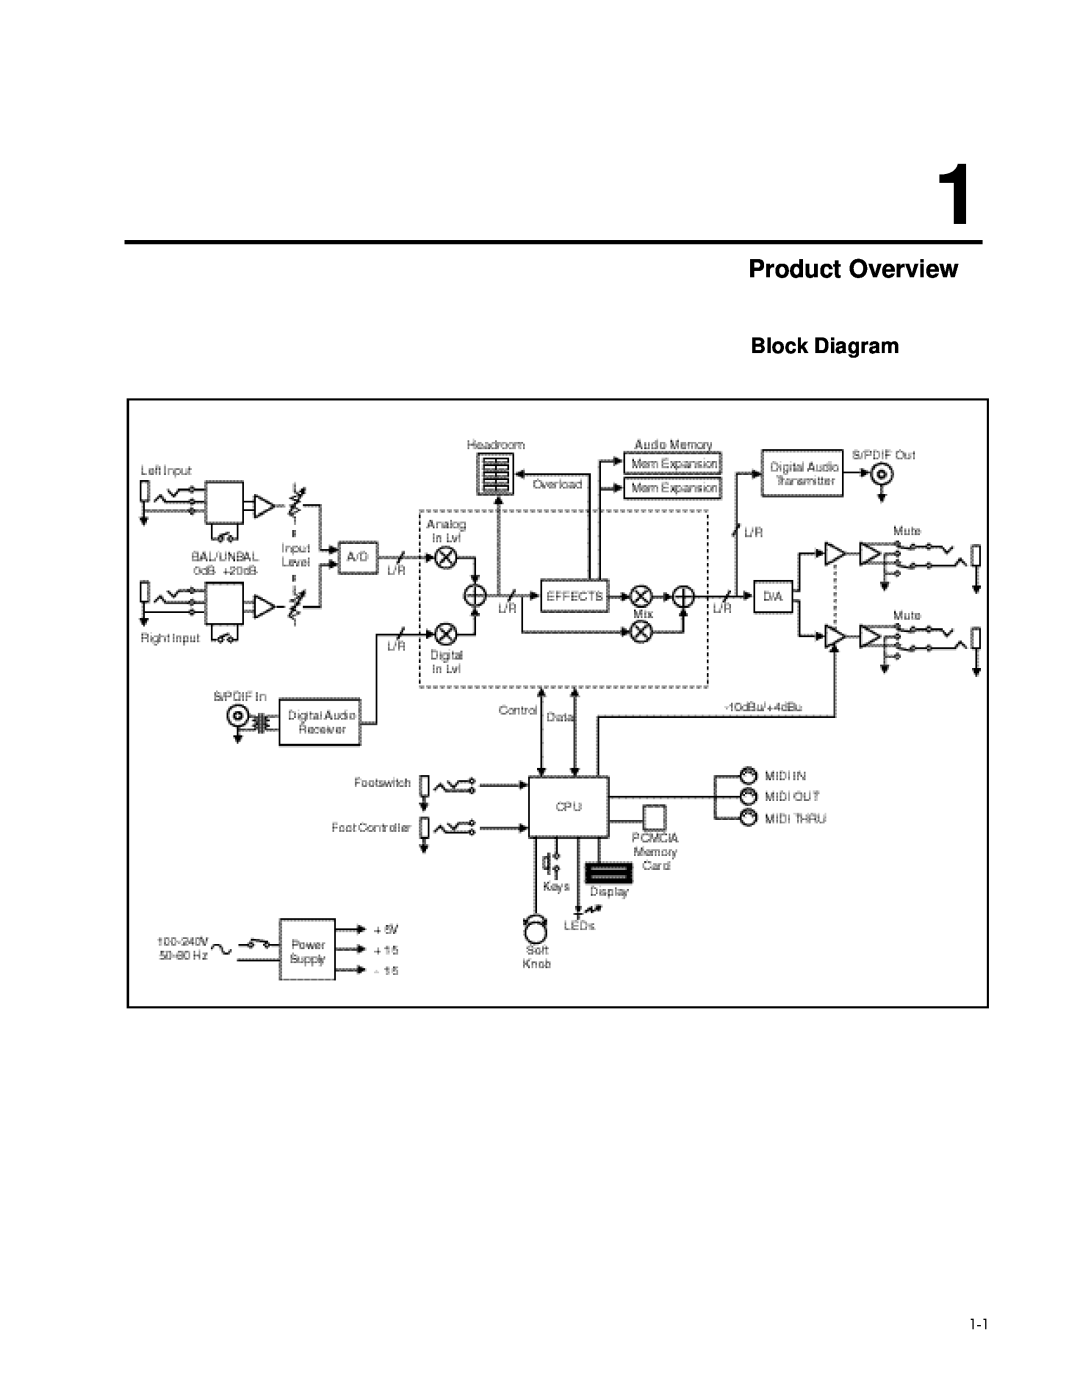 Lexicon PCM 80 manual Product Overview, Block Diagram 